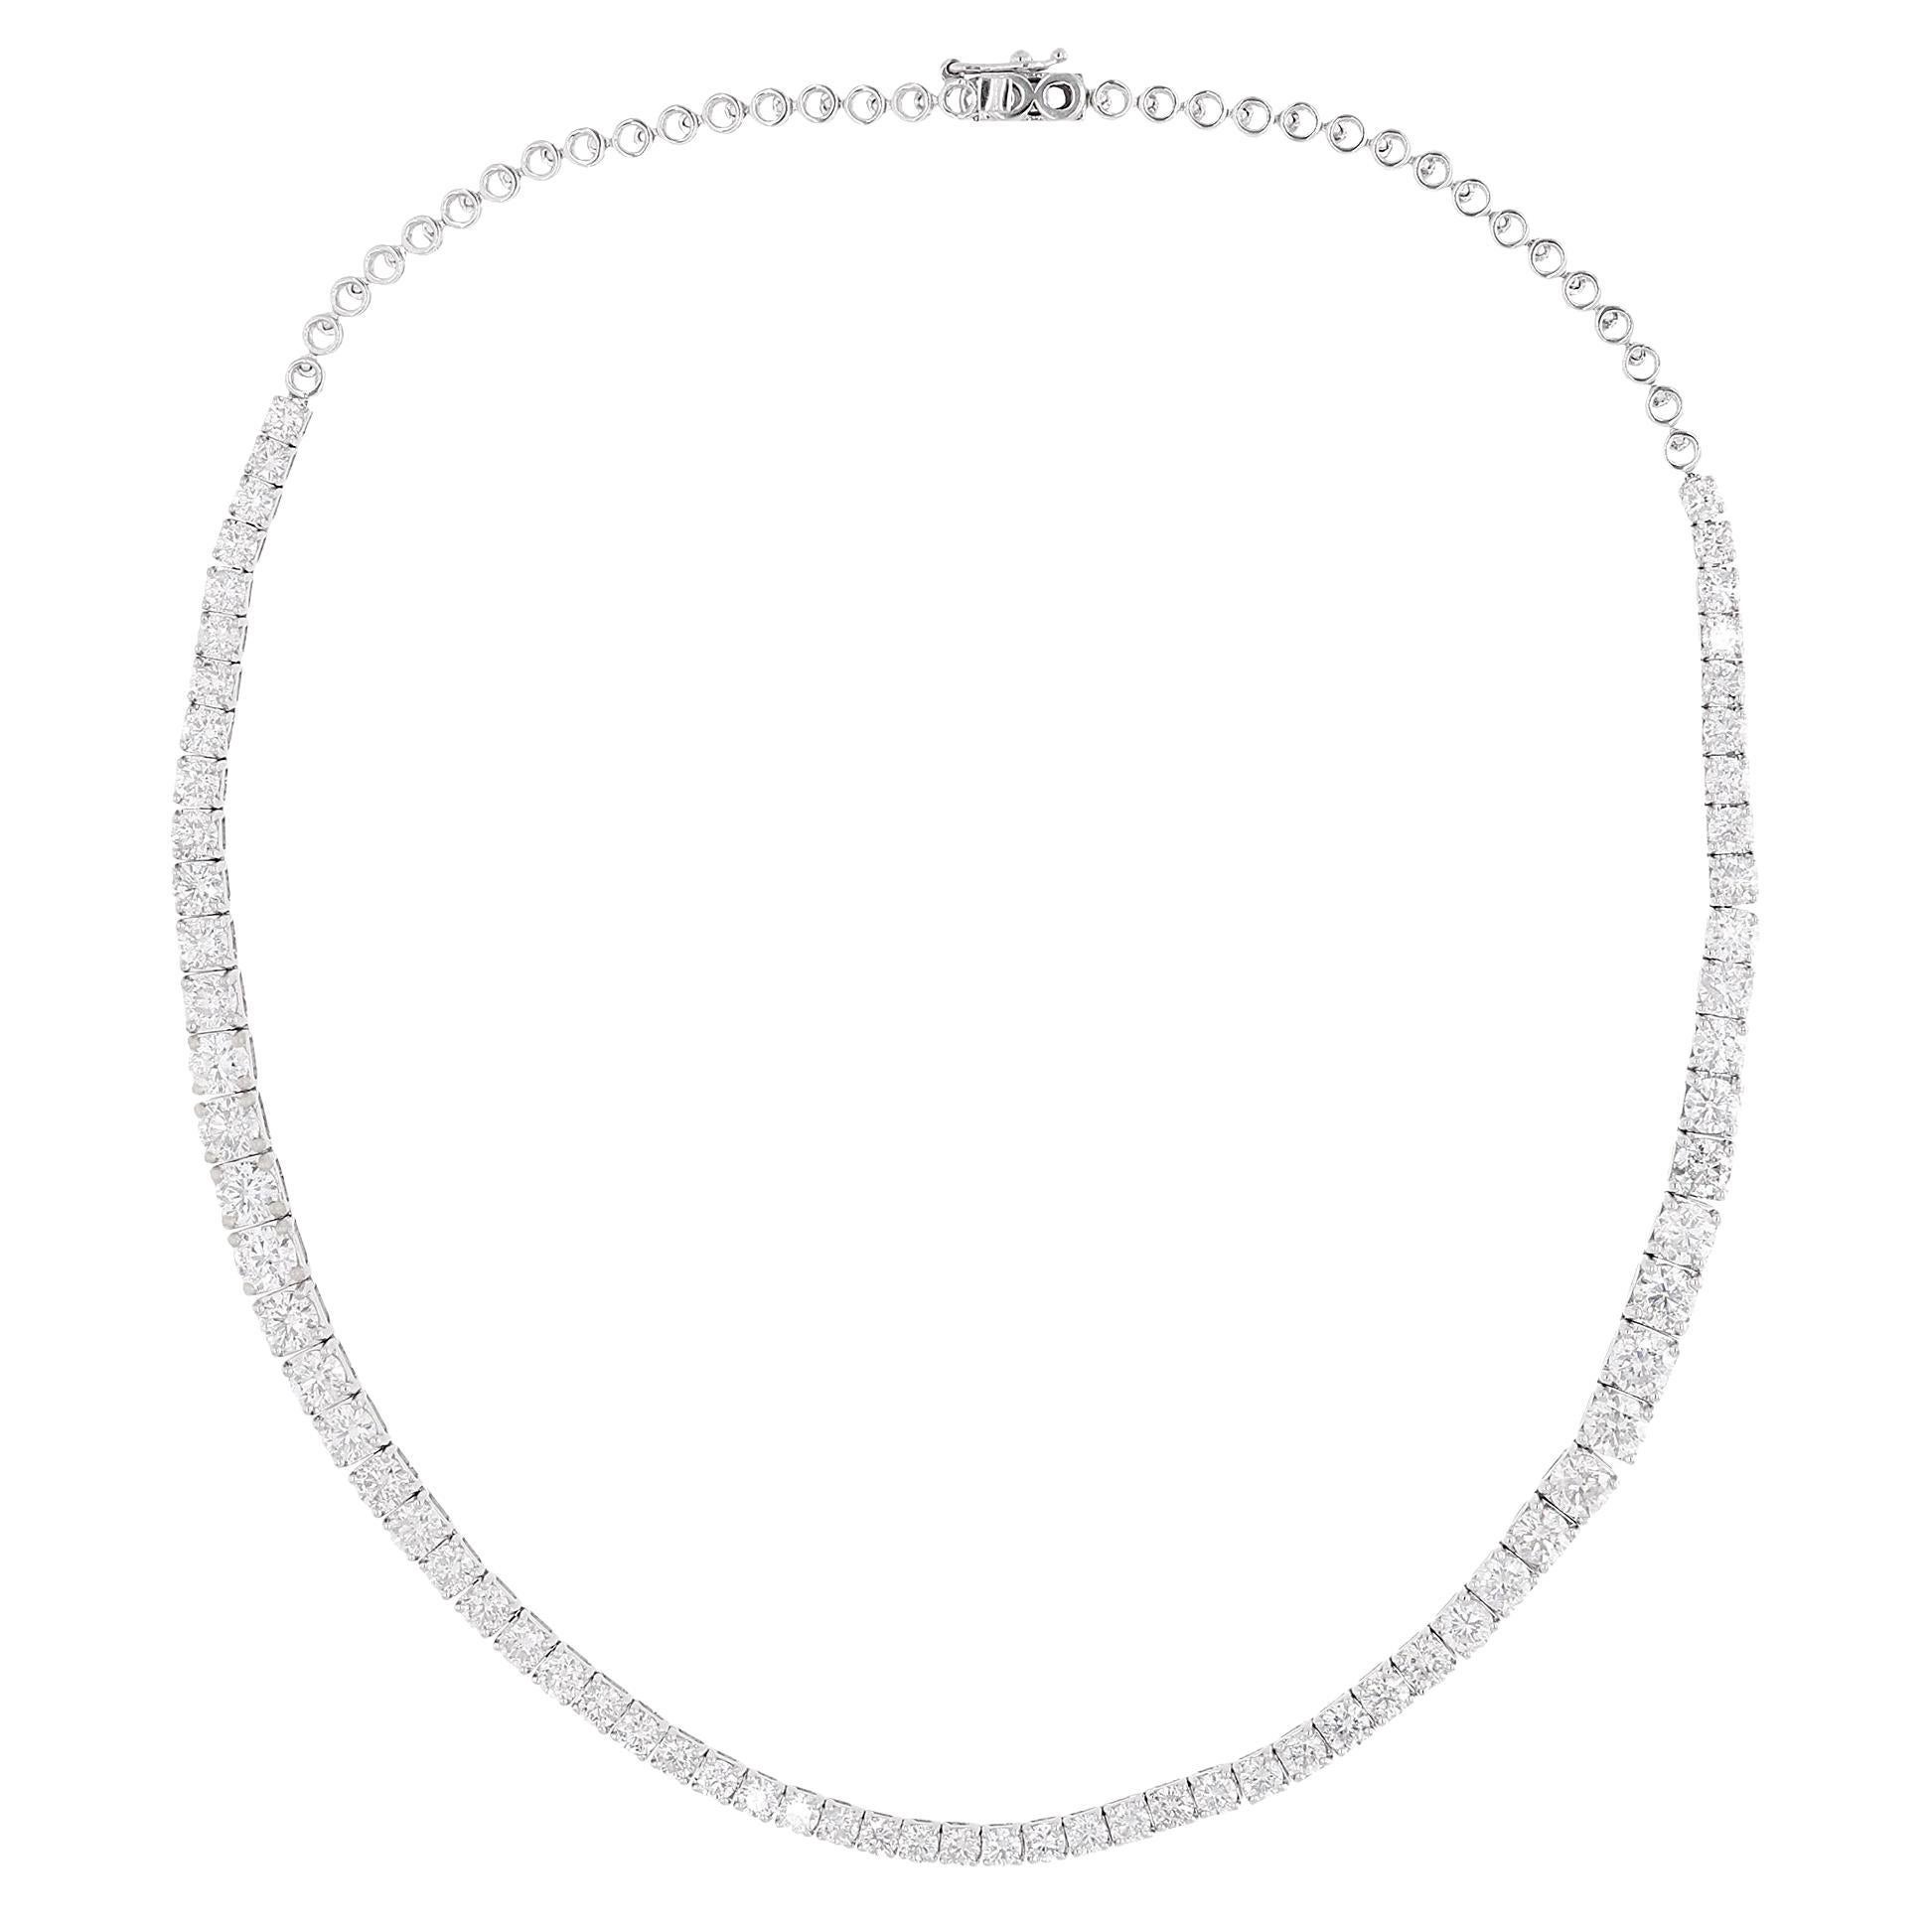 15.6 Carat SI Clarity HI Color Round Diamond Choker Necklace 18 Karat White Gold